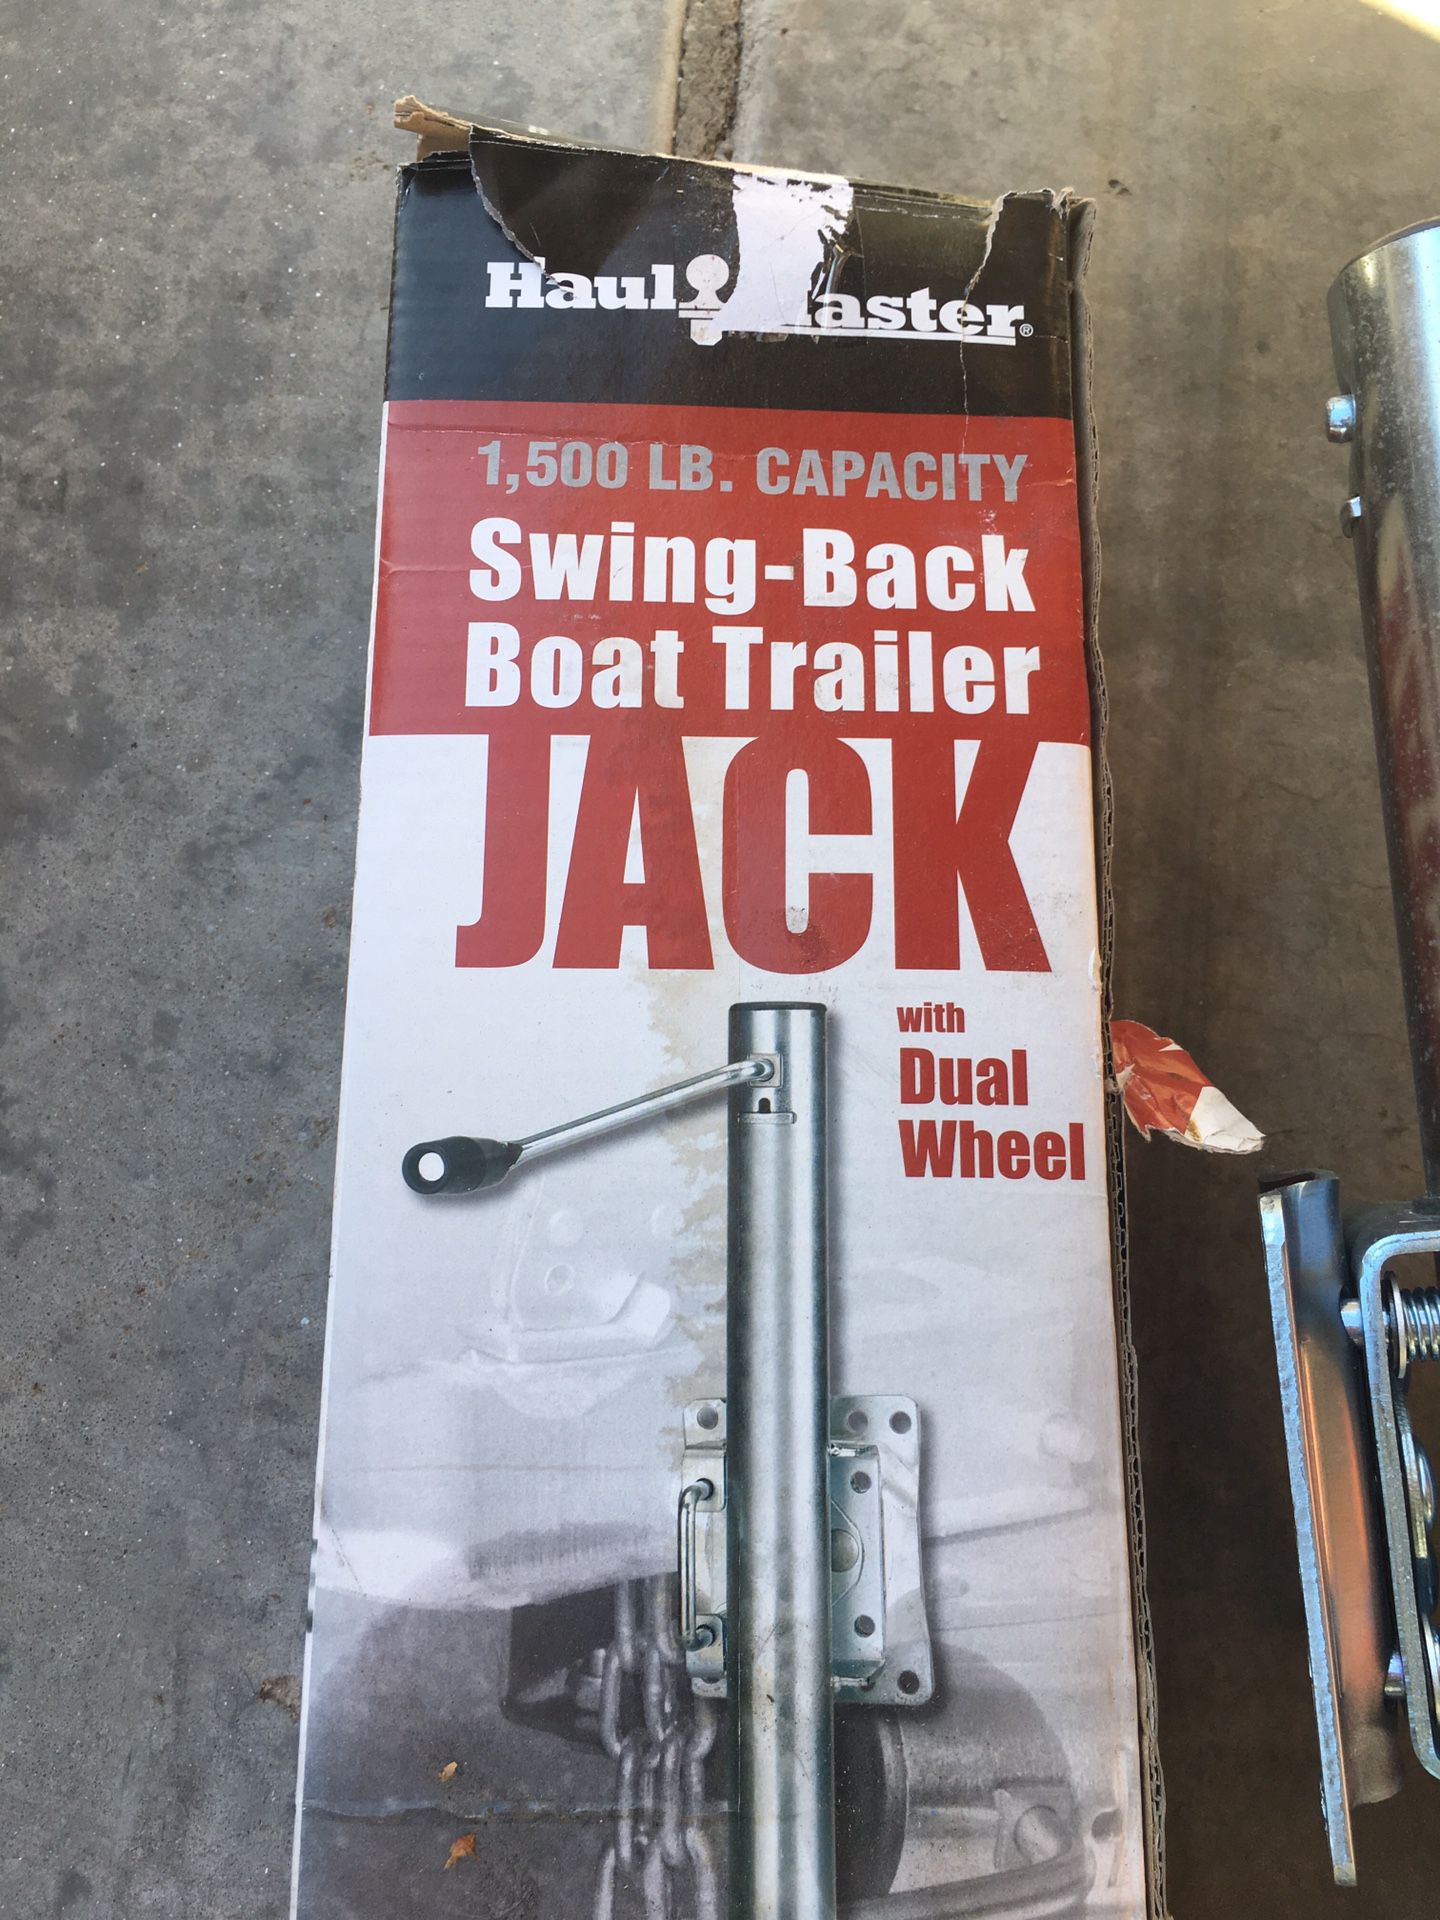 Swing back trailer jack